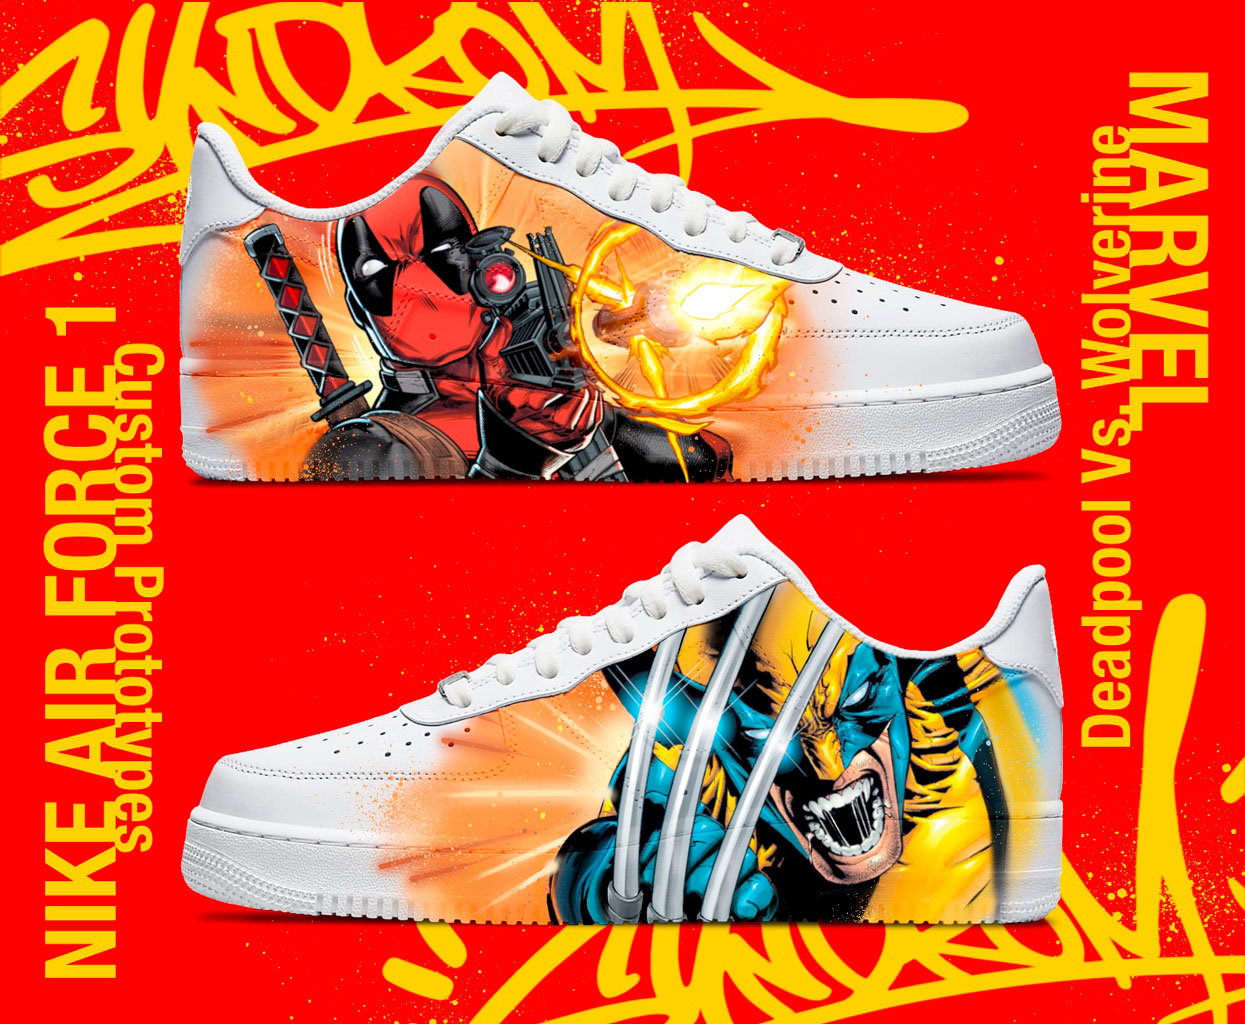 Prototype de personnalisation de baskets sneakers custom "Wolverine Vs. Deadpool"